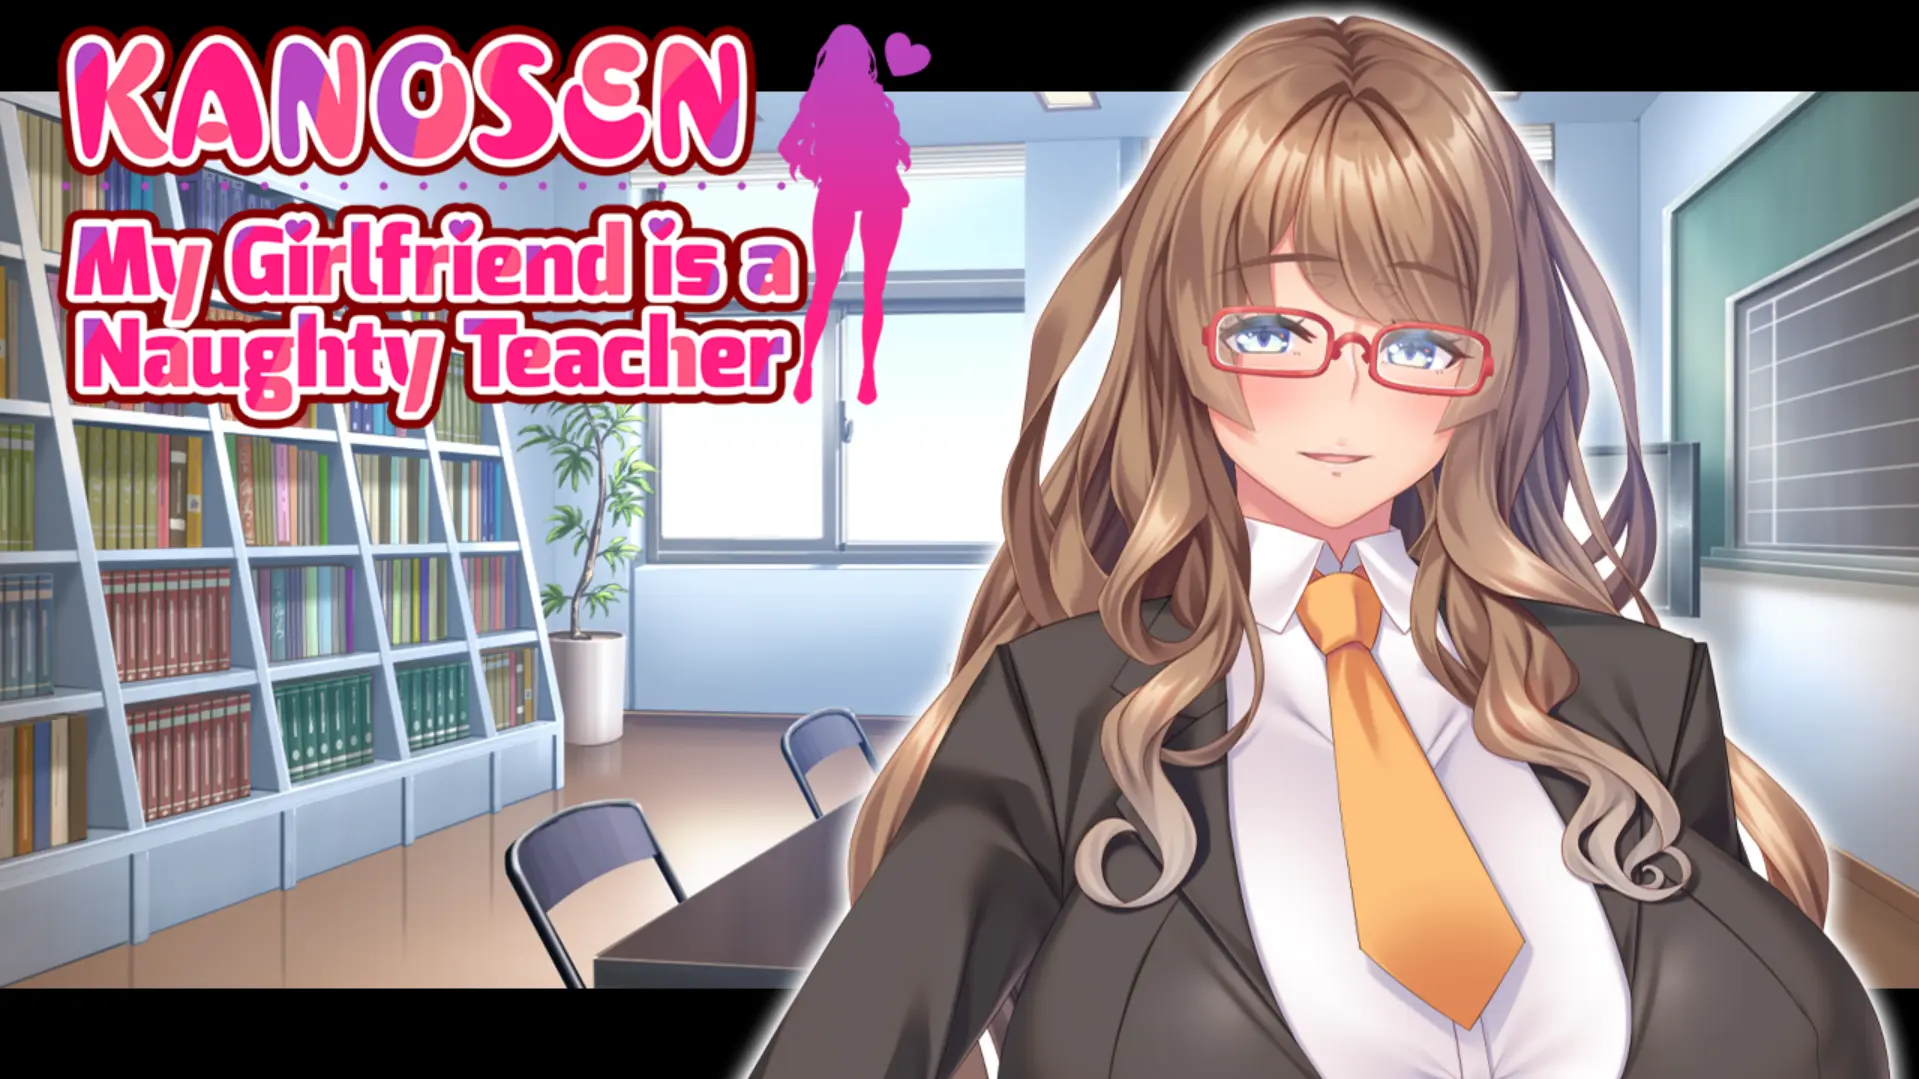 KANOSEN – My Girlfriend is a Naughty Teacher main image